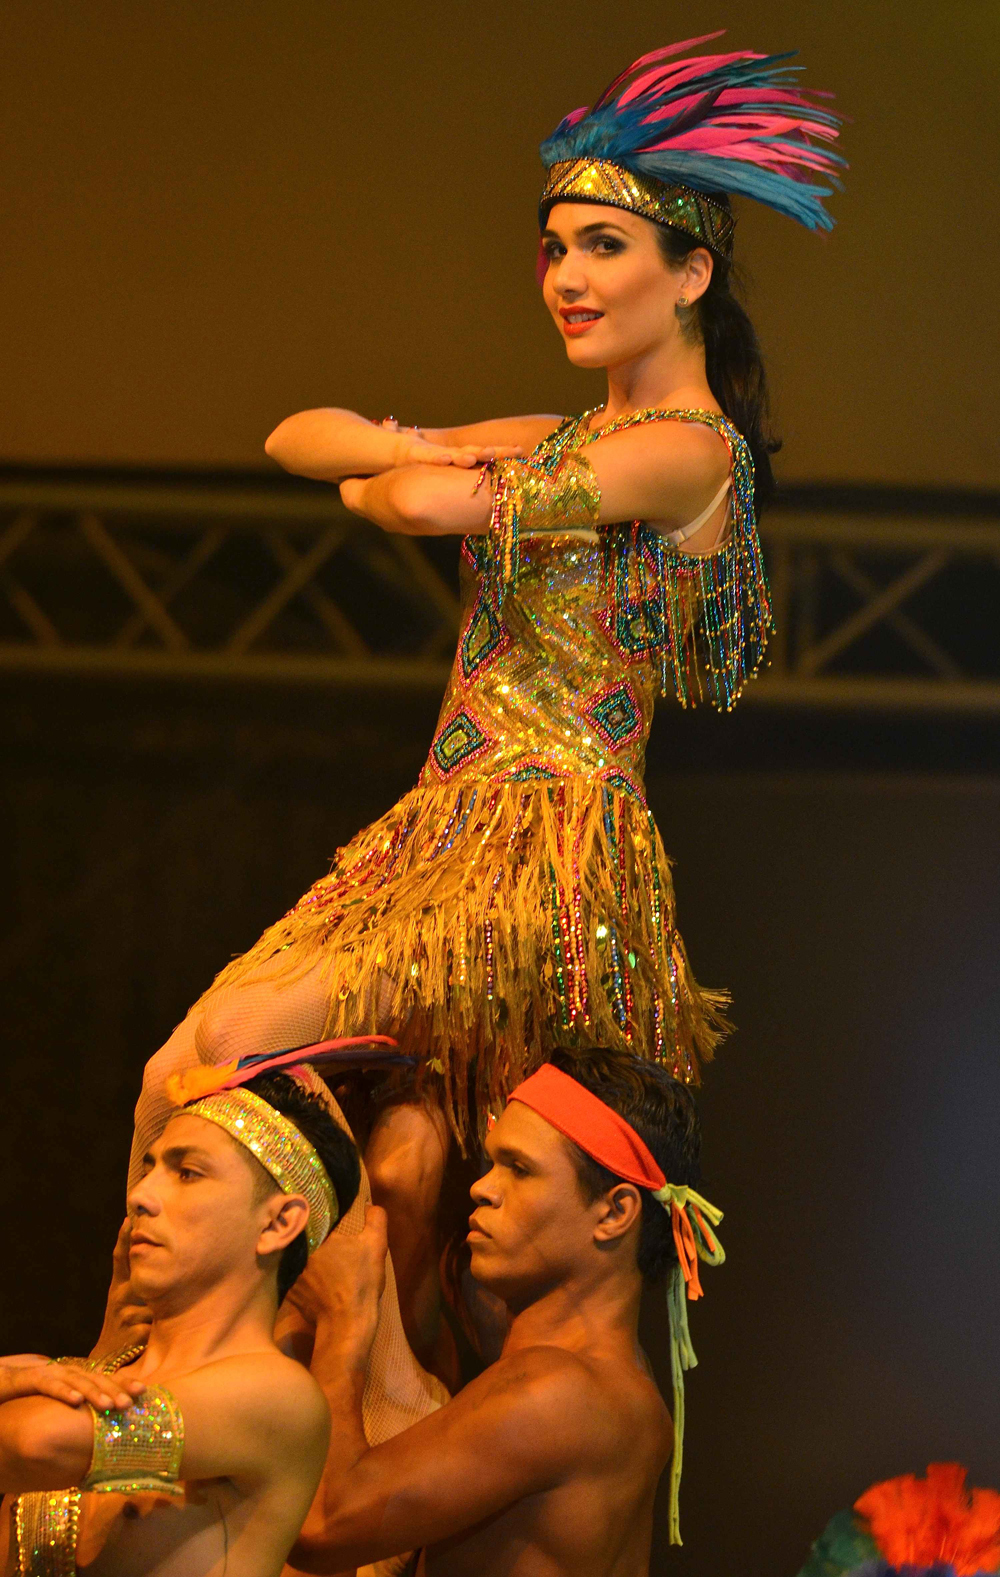 La reina del Carnaval de Barranquilla 2013 Daniela Cepeda Tarud